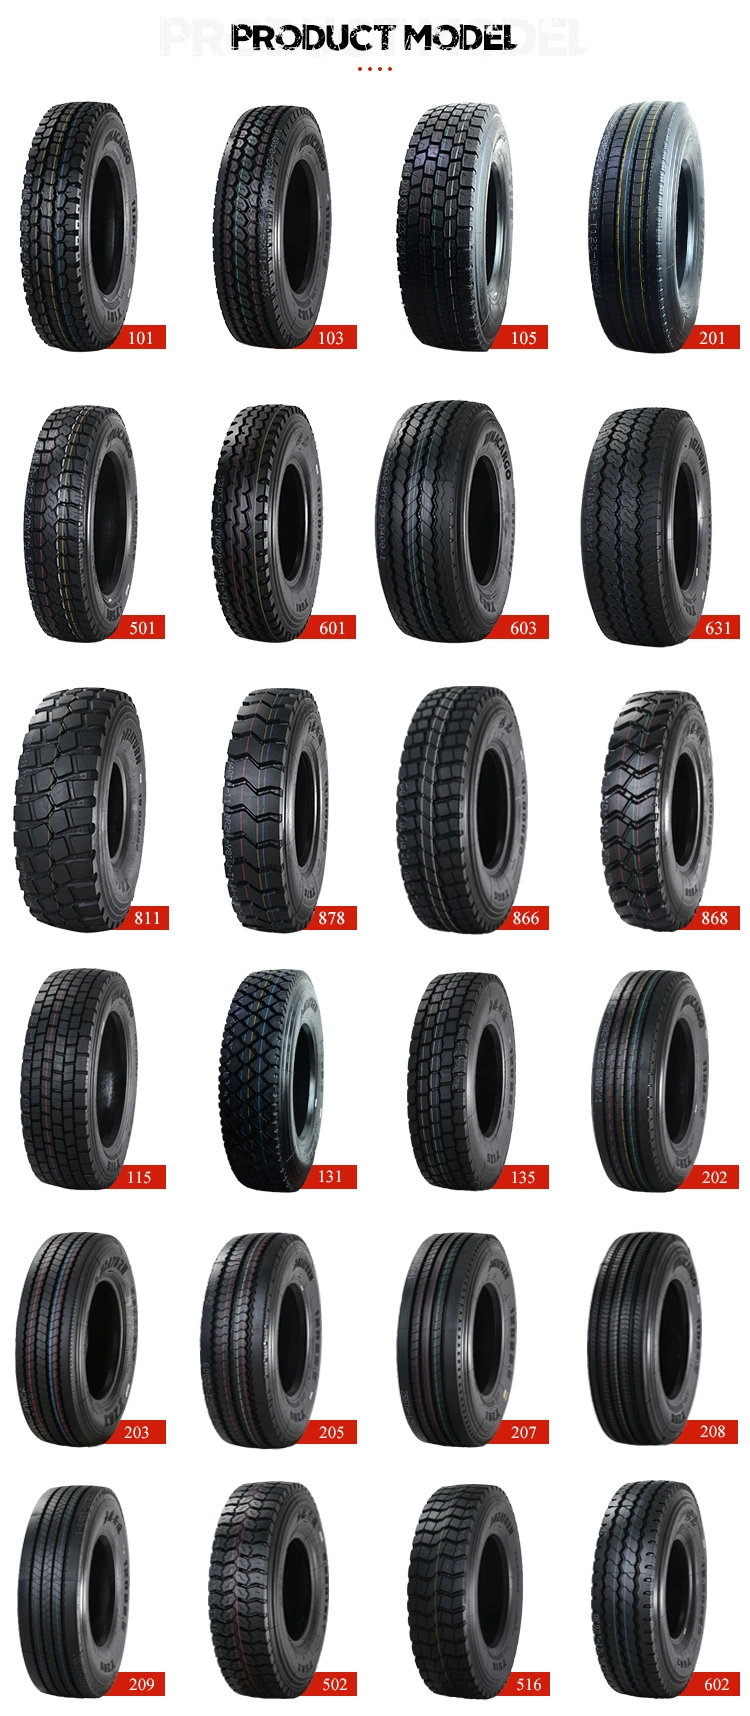 I-3, Excavator Tyre, OTR Tyre with Good Quality, 12.5/80-18, Backhoe Tyre